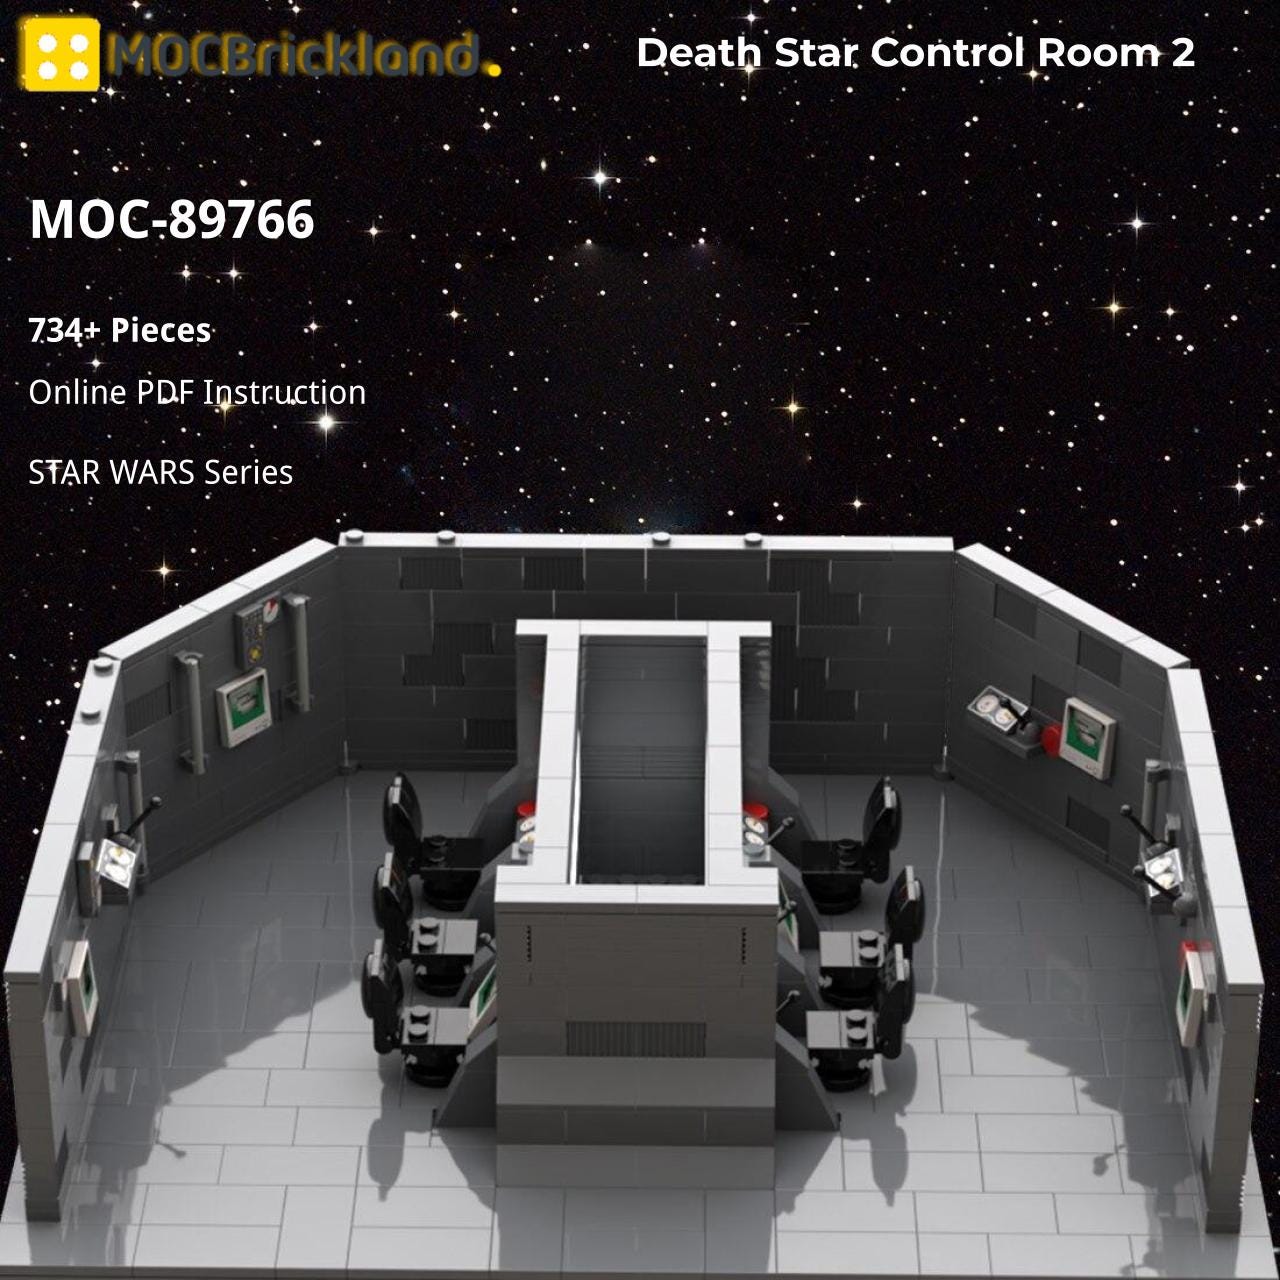 STAR WARS MOC-89766 Death Star Control Room 2 MOCBRICKLAND - Lepin 